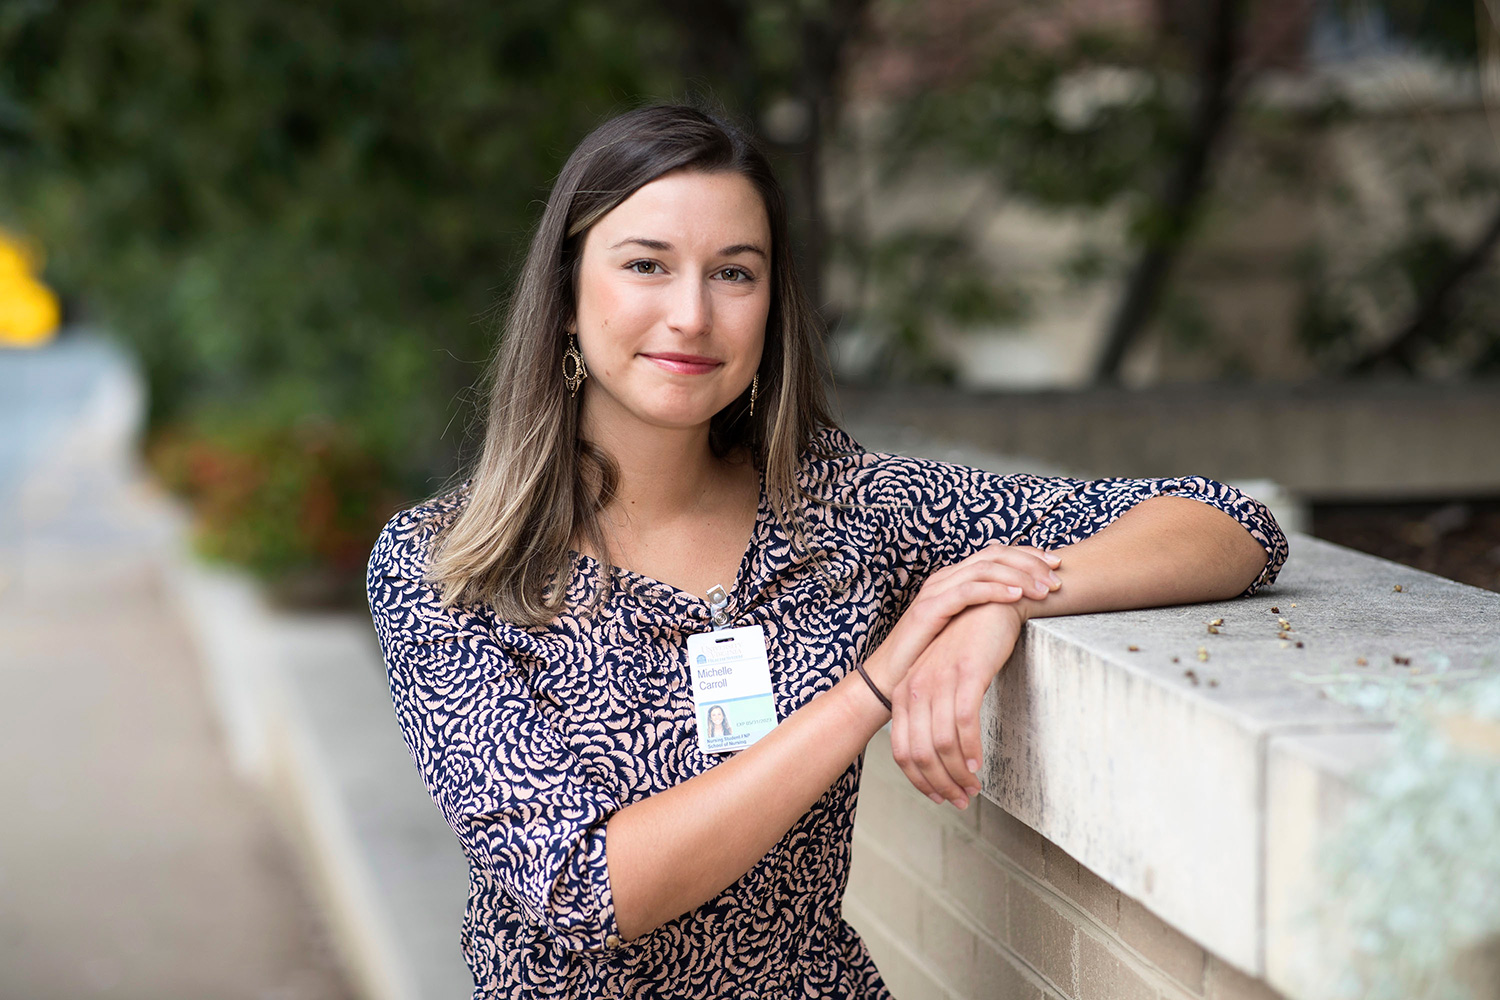 Michelle Carroll is a student in UVA’s master’s in nursing program.